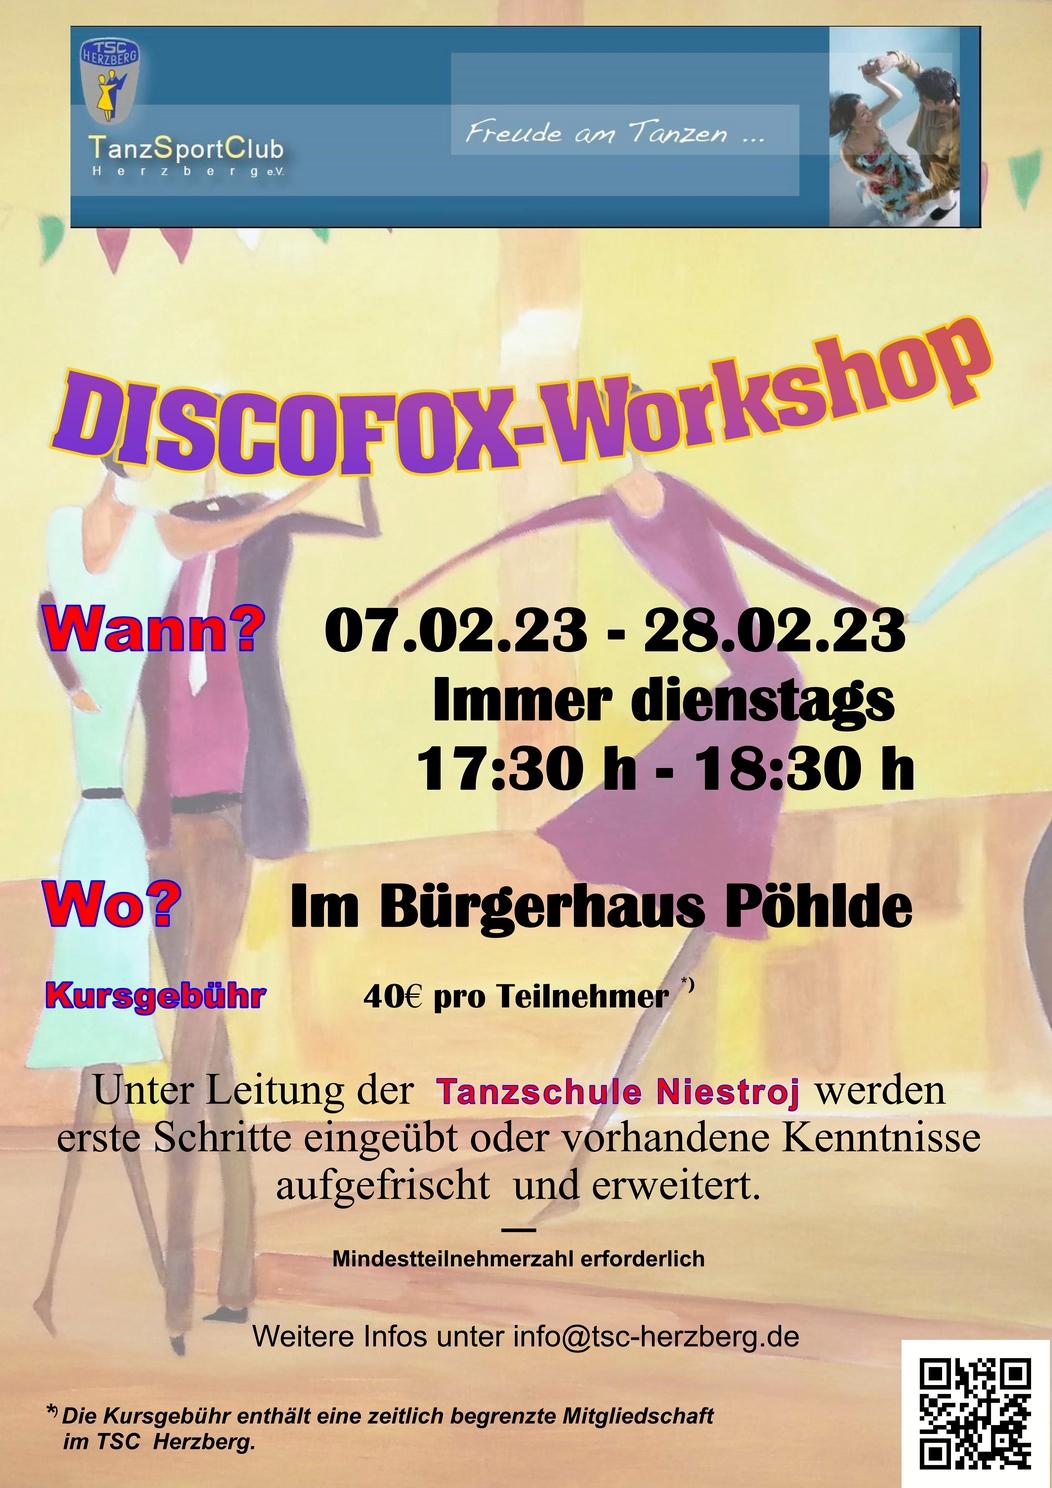 Discofox-Workshop